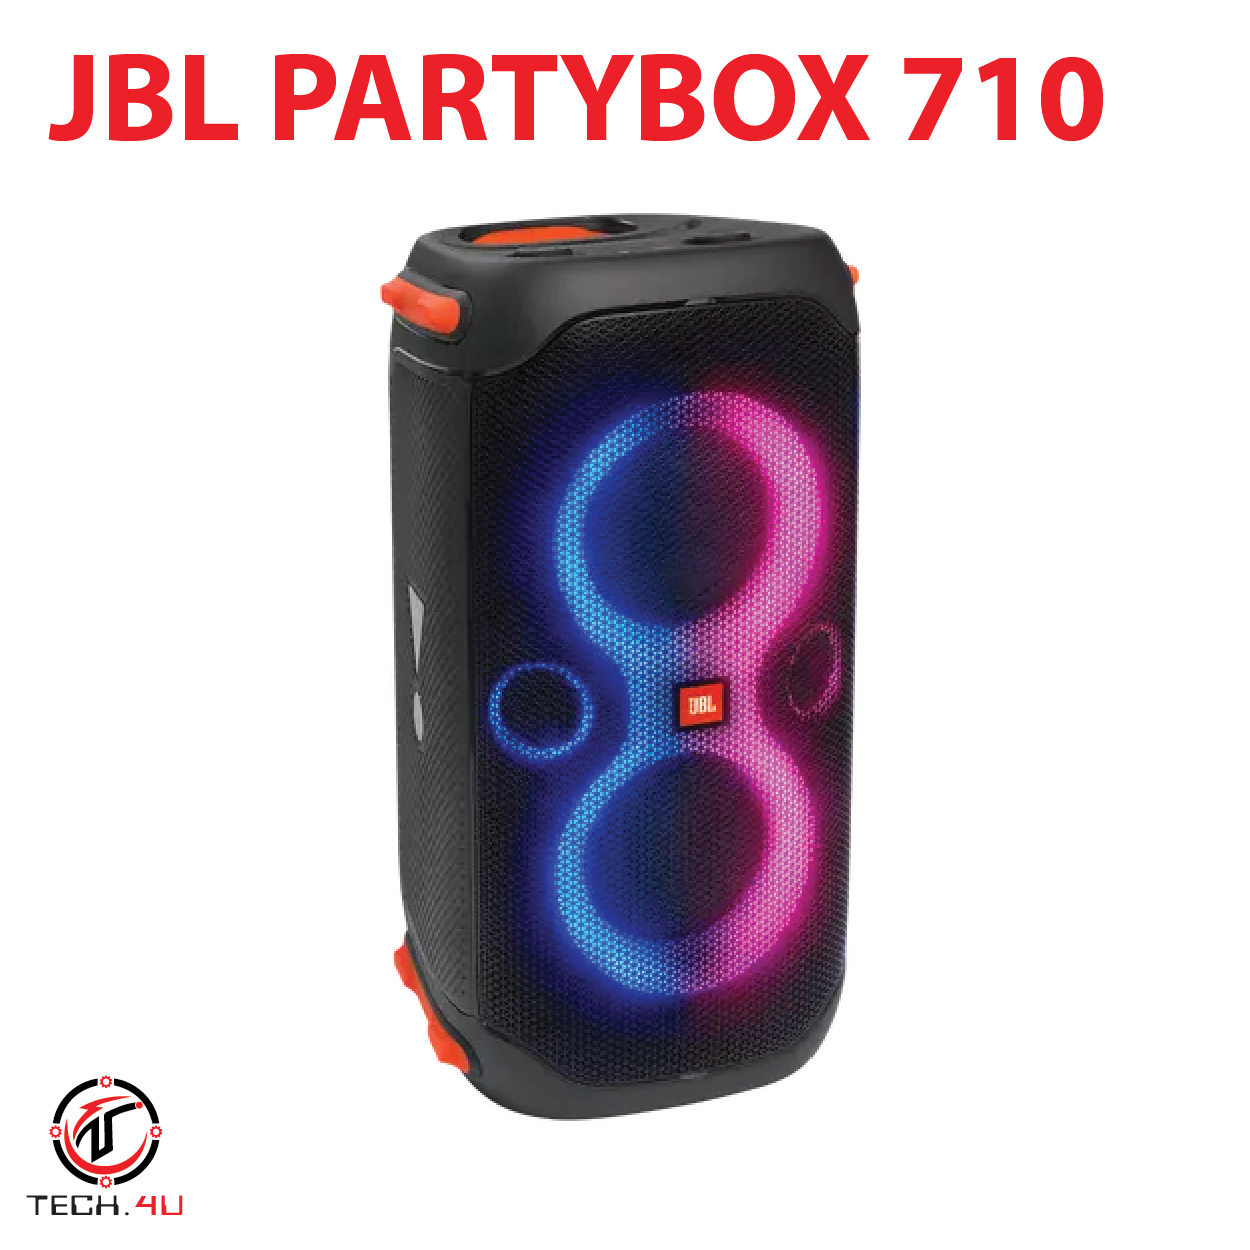 JBL Partybox 710 – Tech 4U